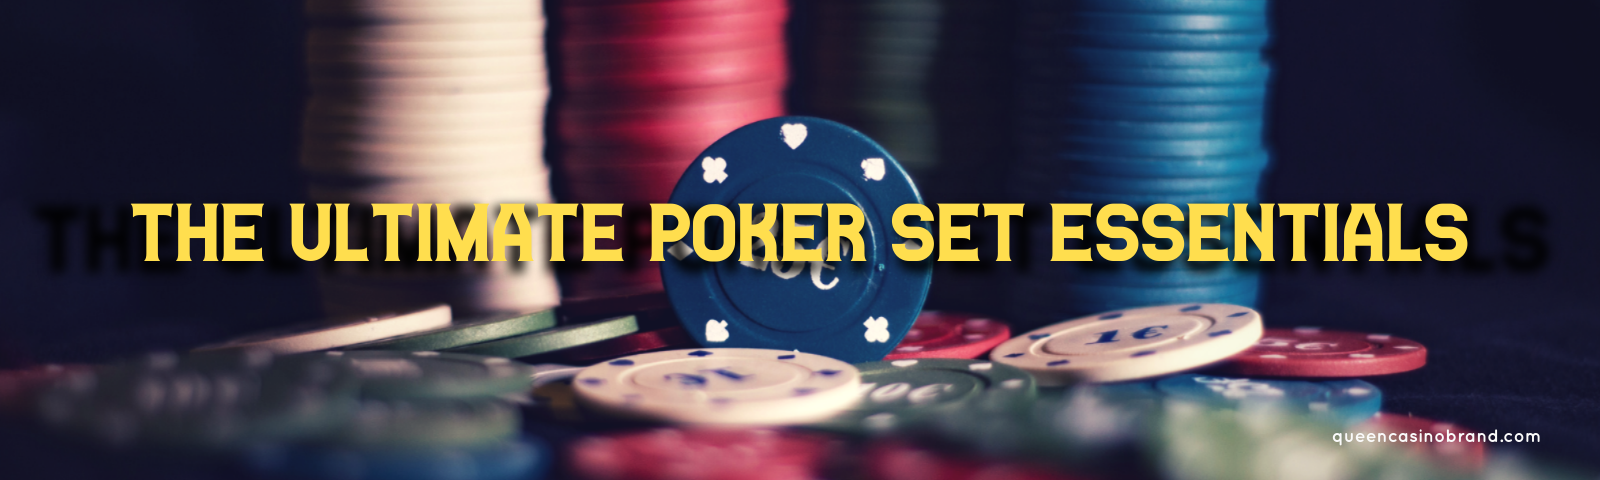 The Ultimate Poker Set Essentials - Queen Casino Brand